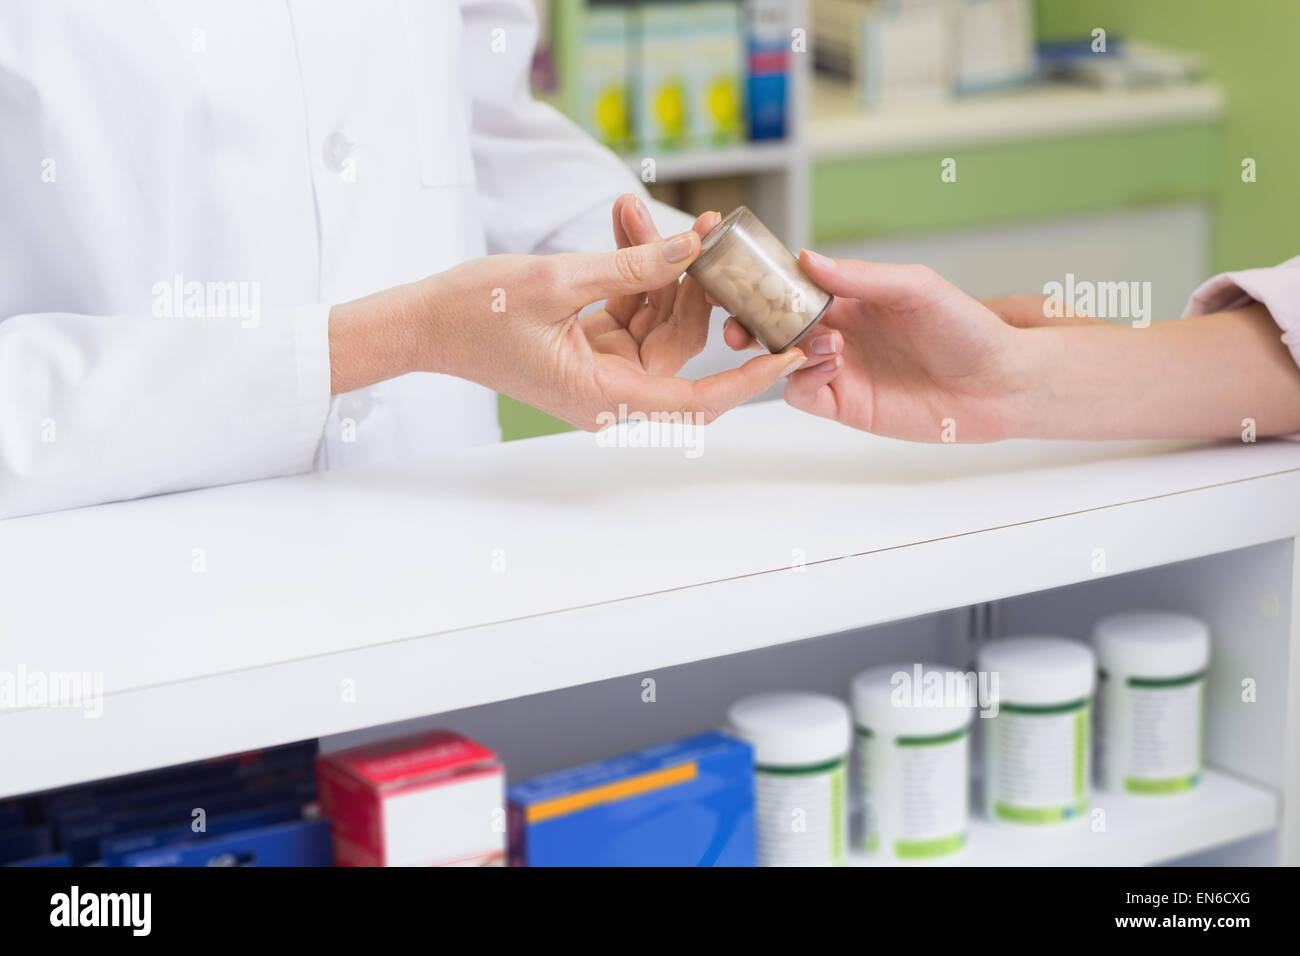 Pharmacist and costumer holding medicine jar Stock Photo